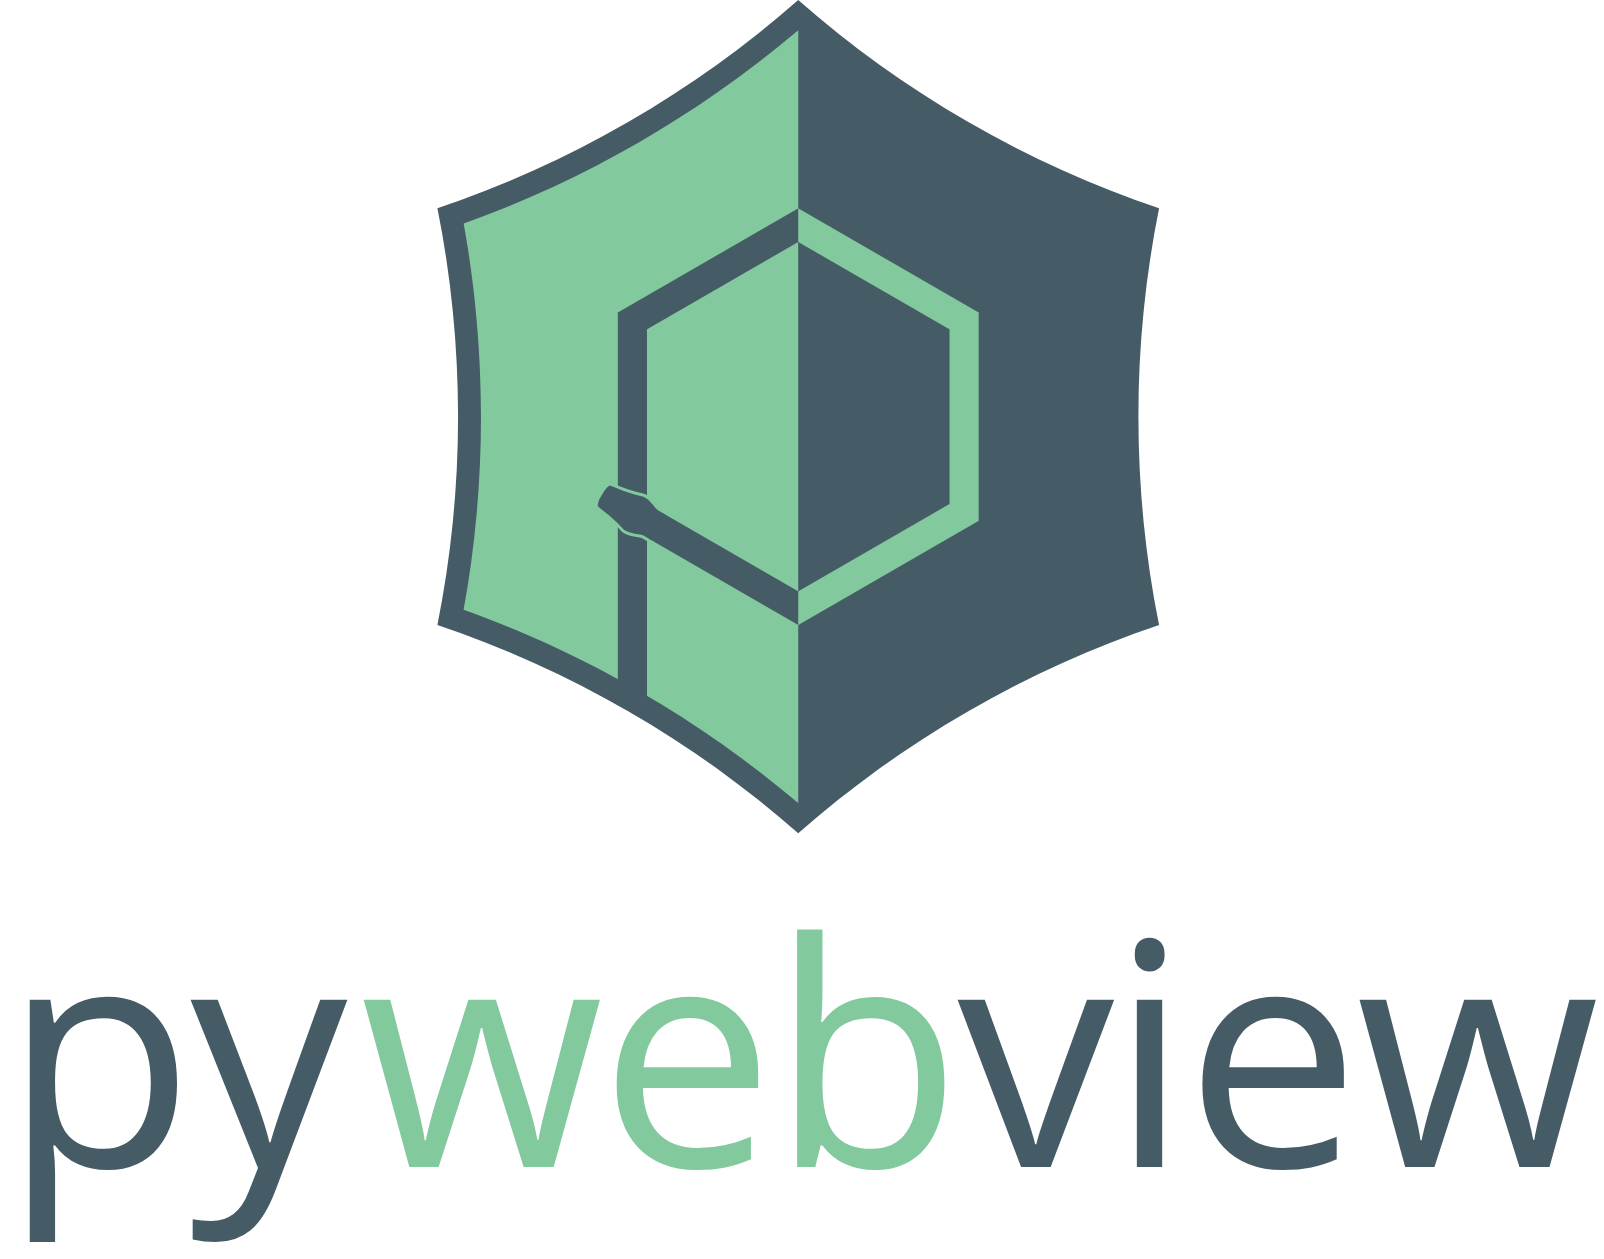 pywebview logo